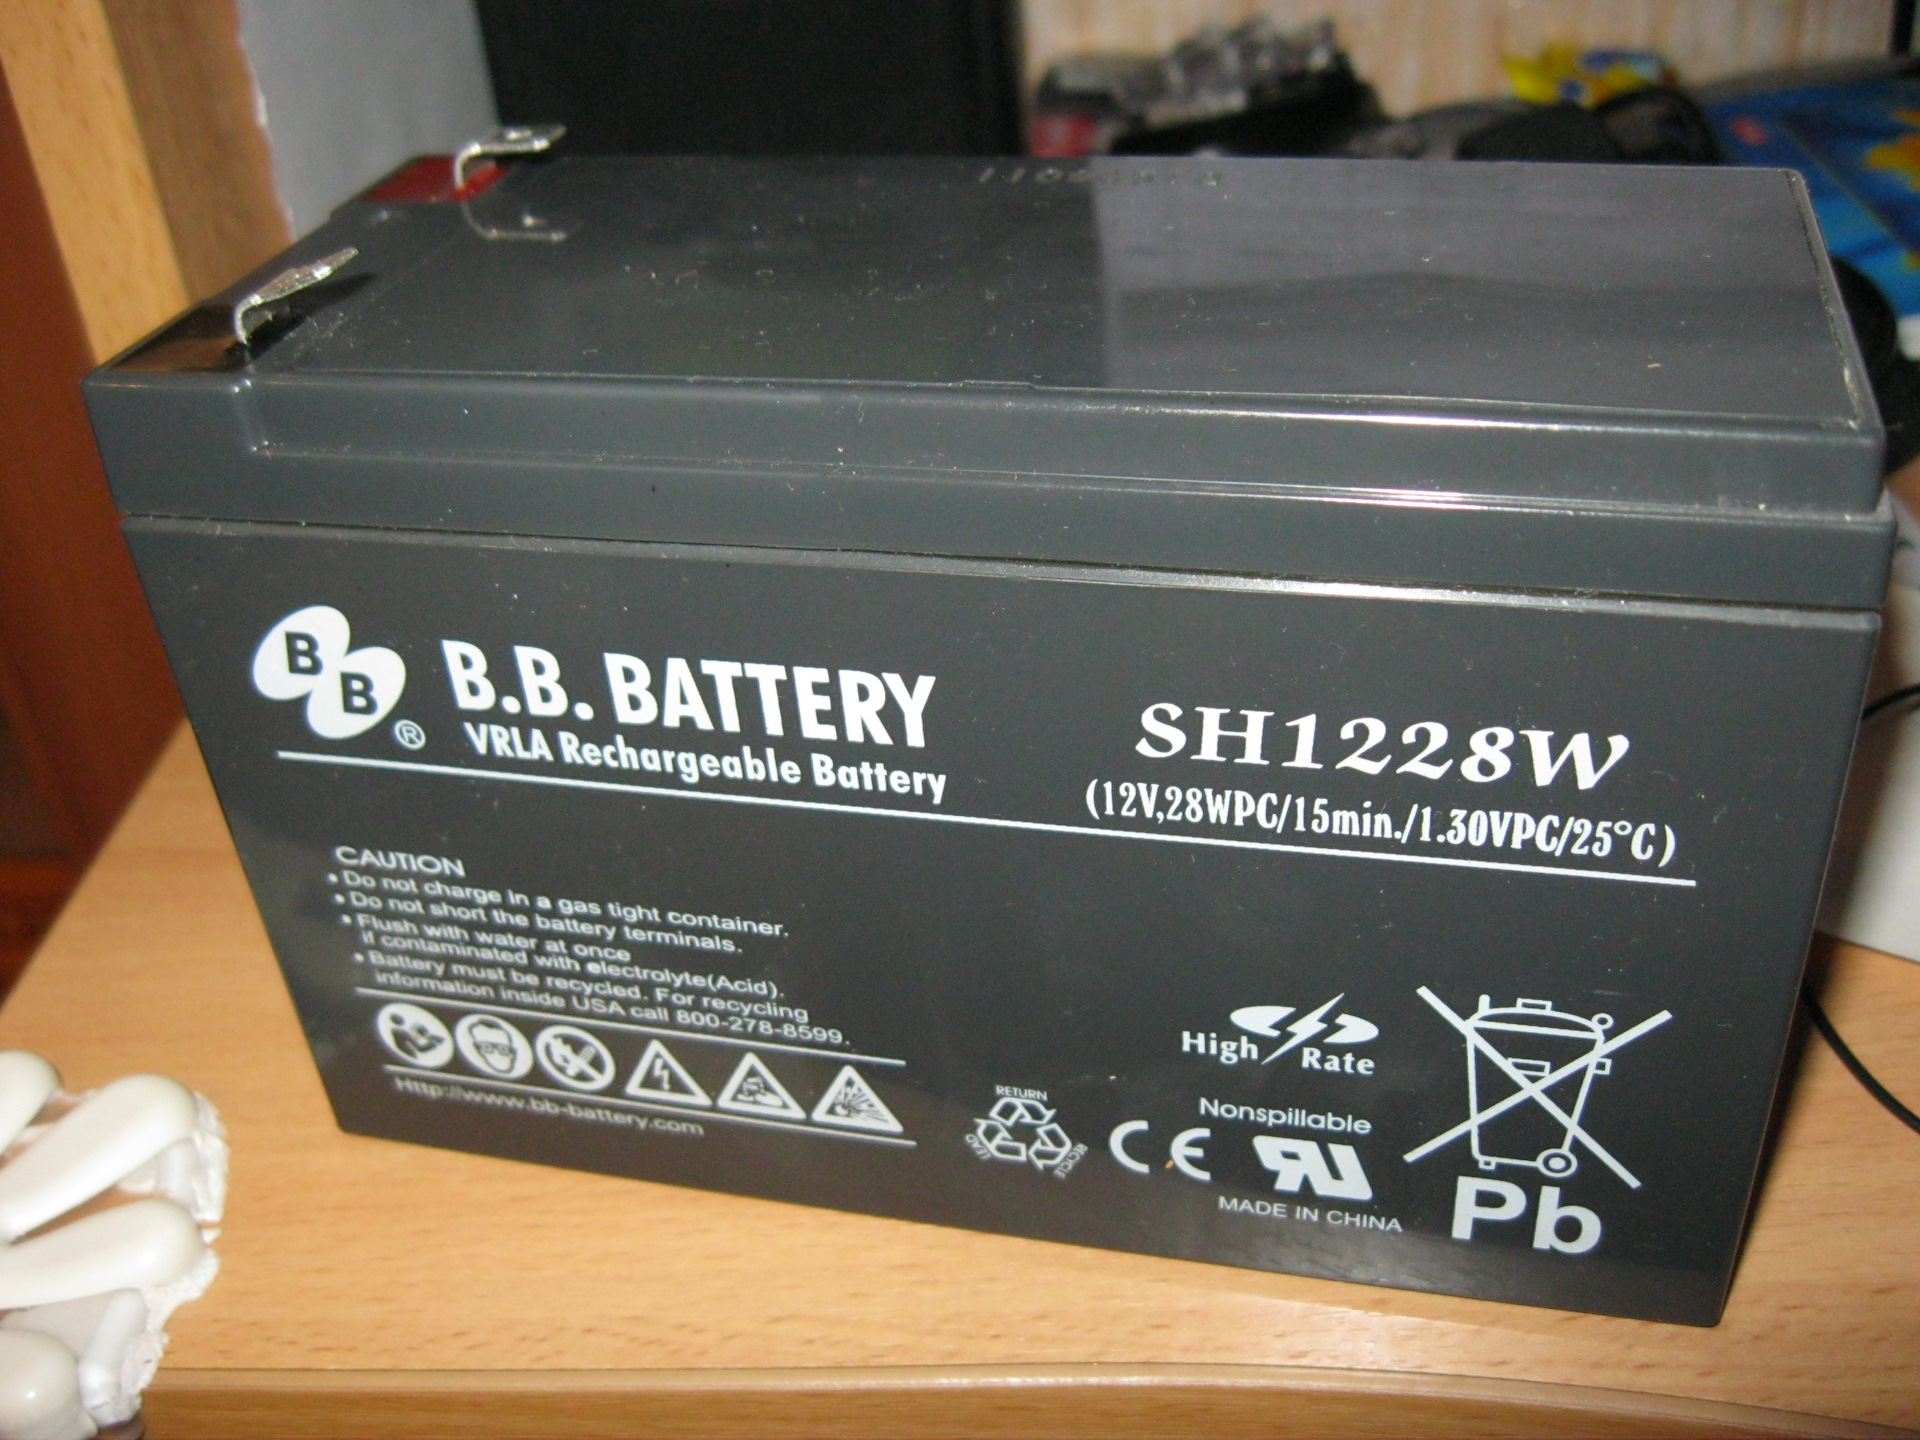 B b battery 12 12. Аккумулятор BB Battery sh1228w. Аккумулятор sh1228w 12v b.b.Battery 28wpc/15min/1.0VPC/25. Аккумулятор b.b. Battery sh1228w s. Sh1228w аккумулятор для ИБП.